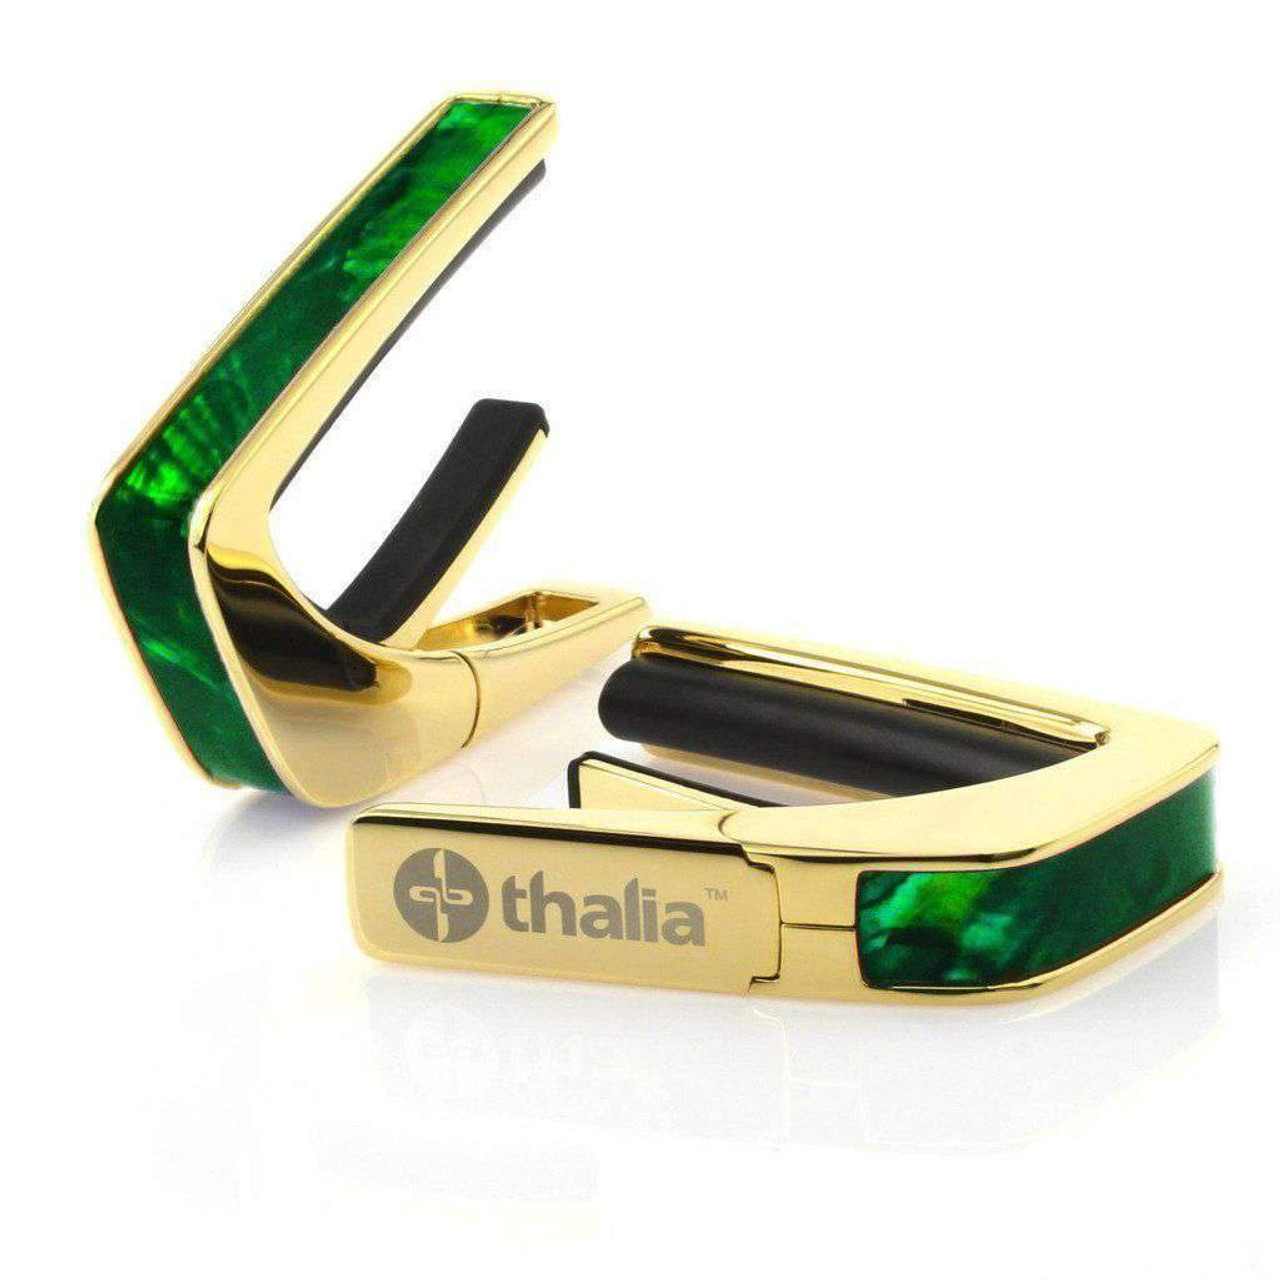 Thalia - Premium Guitar Capo - Green Angel Wing Inlay w/ 25k Gold Finish